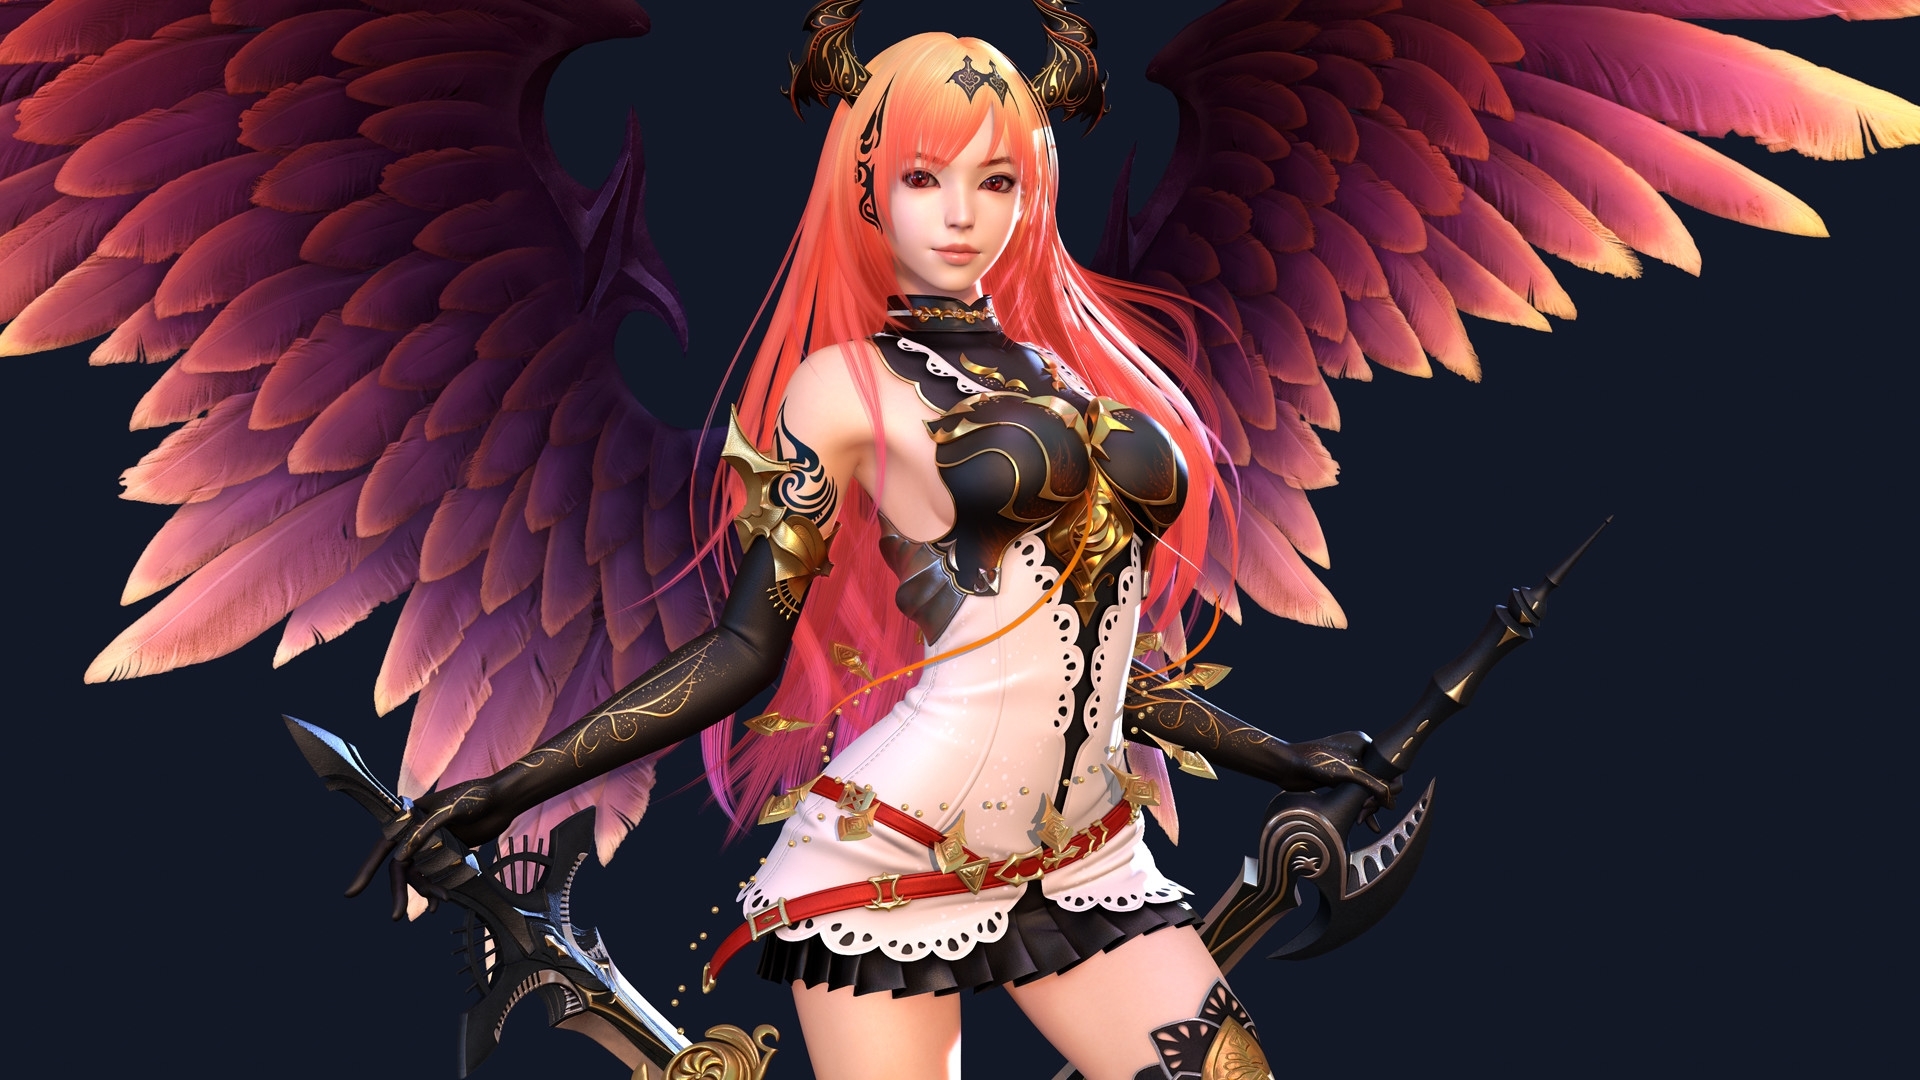 Wallpaper id fantasy wings girl shin jeongho angel pink horns free download